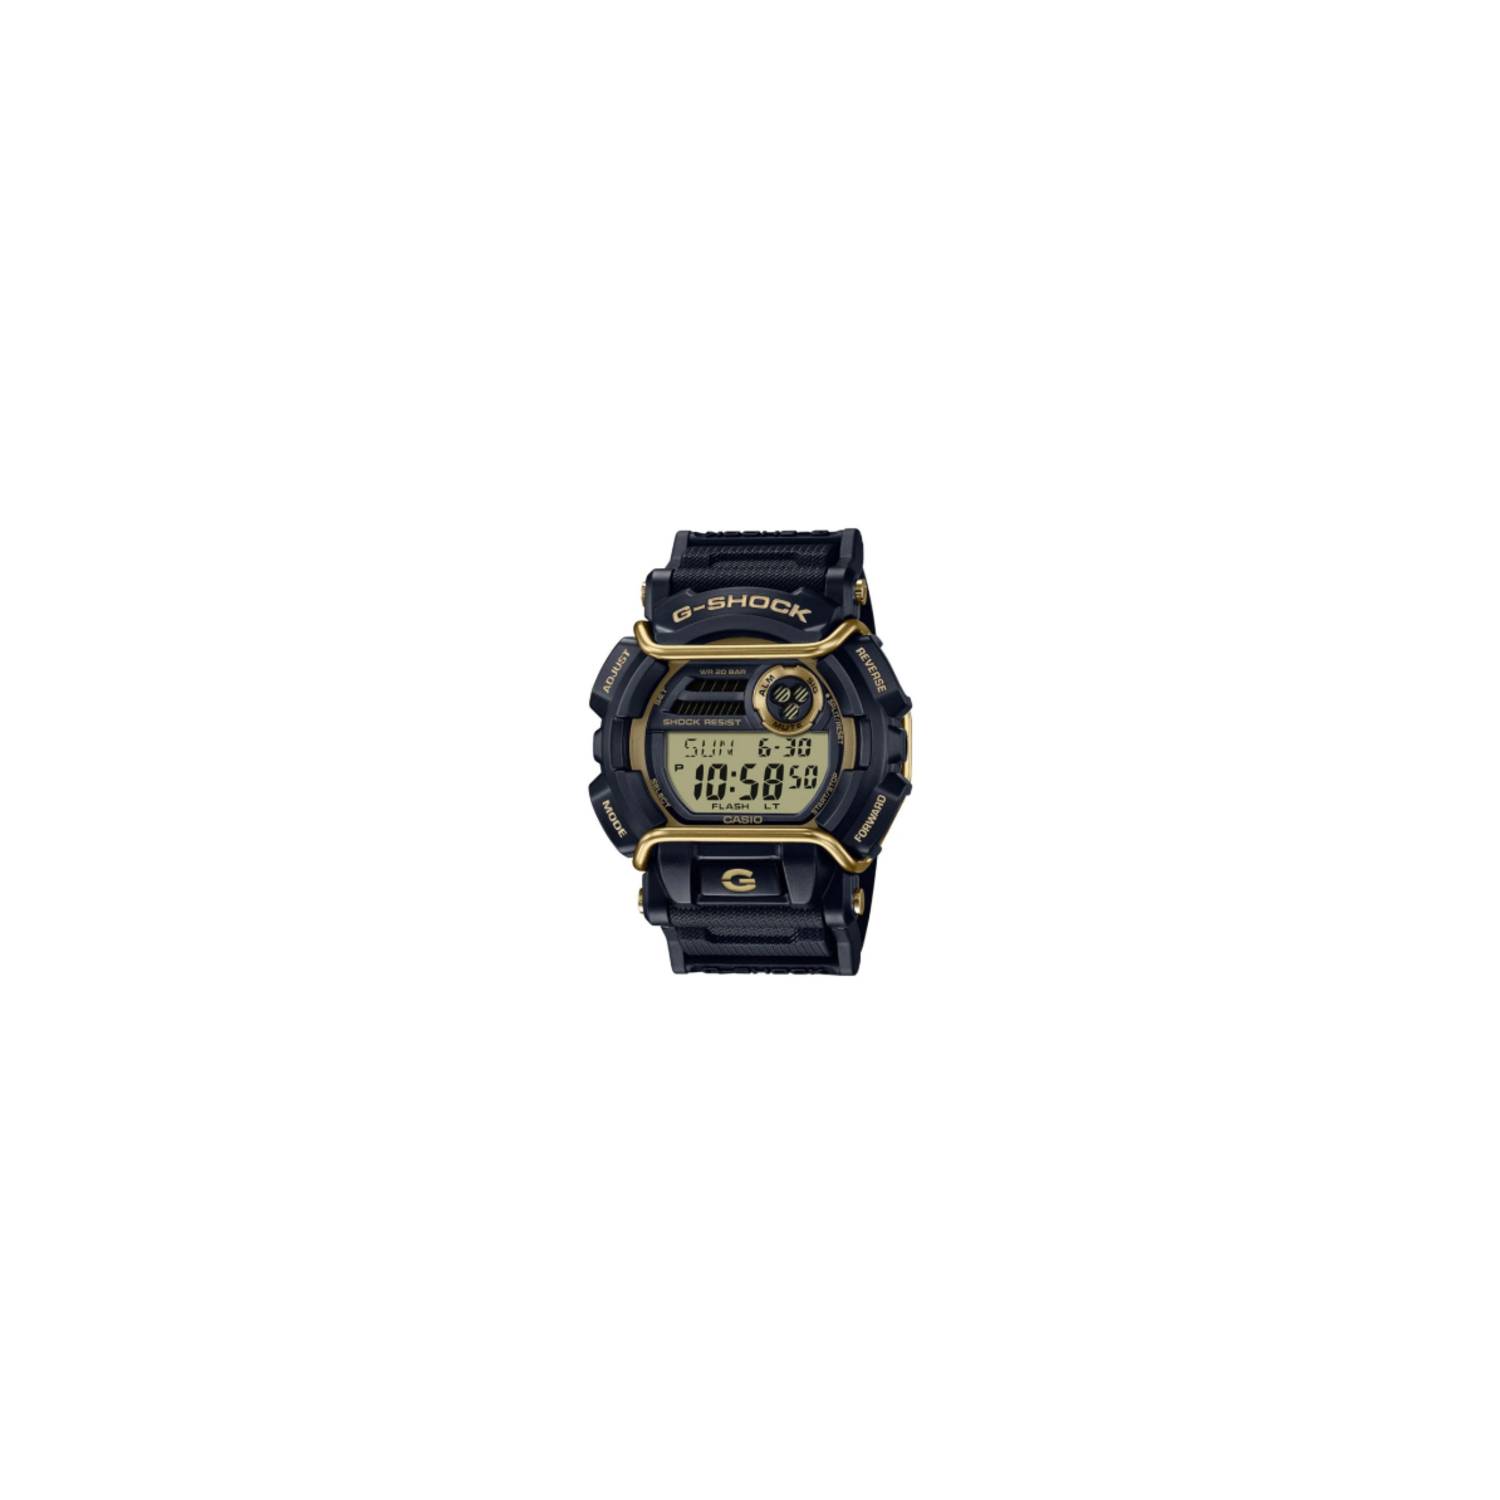 Reloj Digital Hombre GD-400GB-1B2 G-Shock Casio